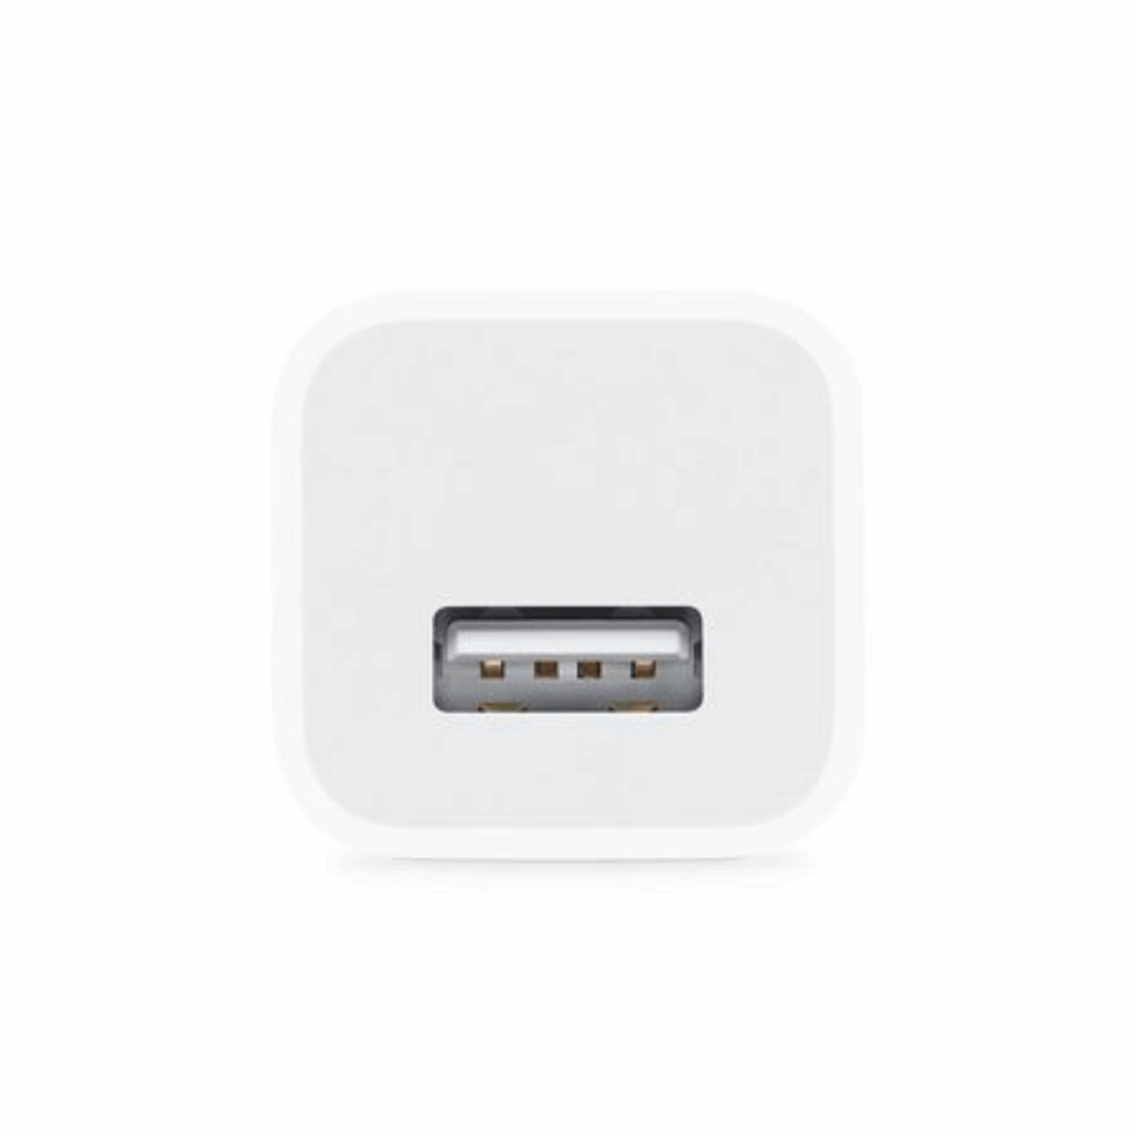 Apple 5W USB Power Adapter -White